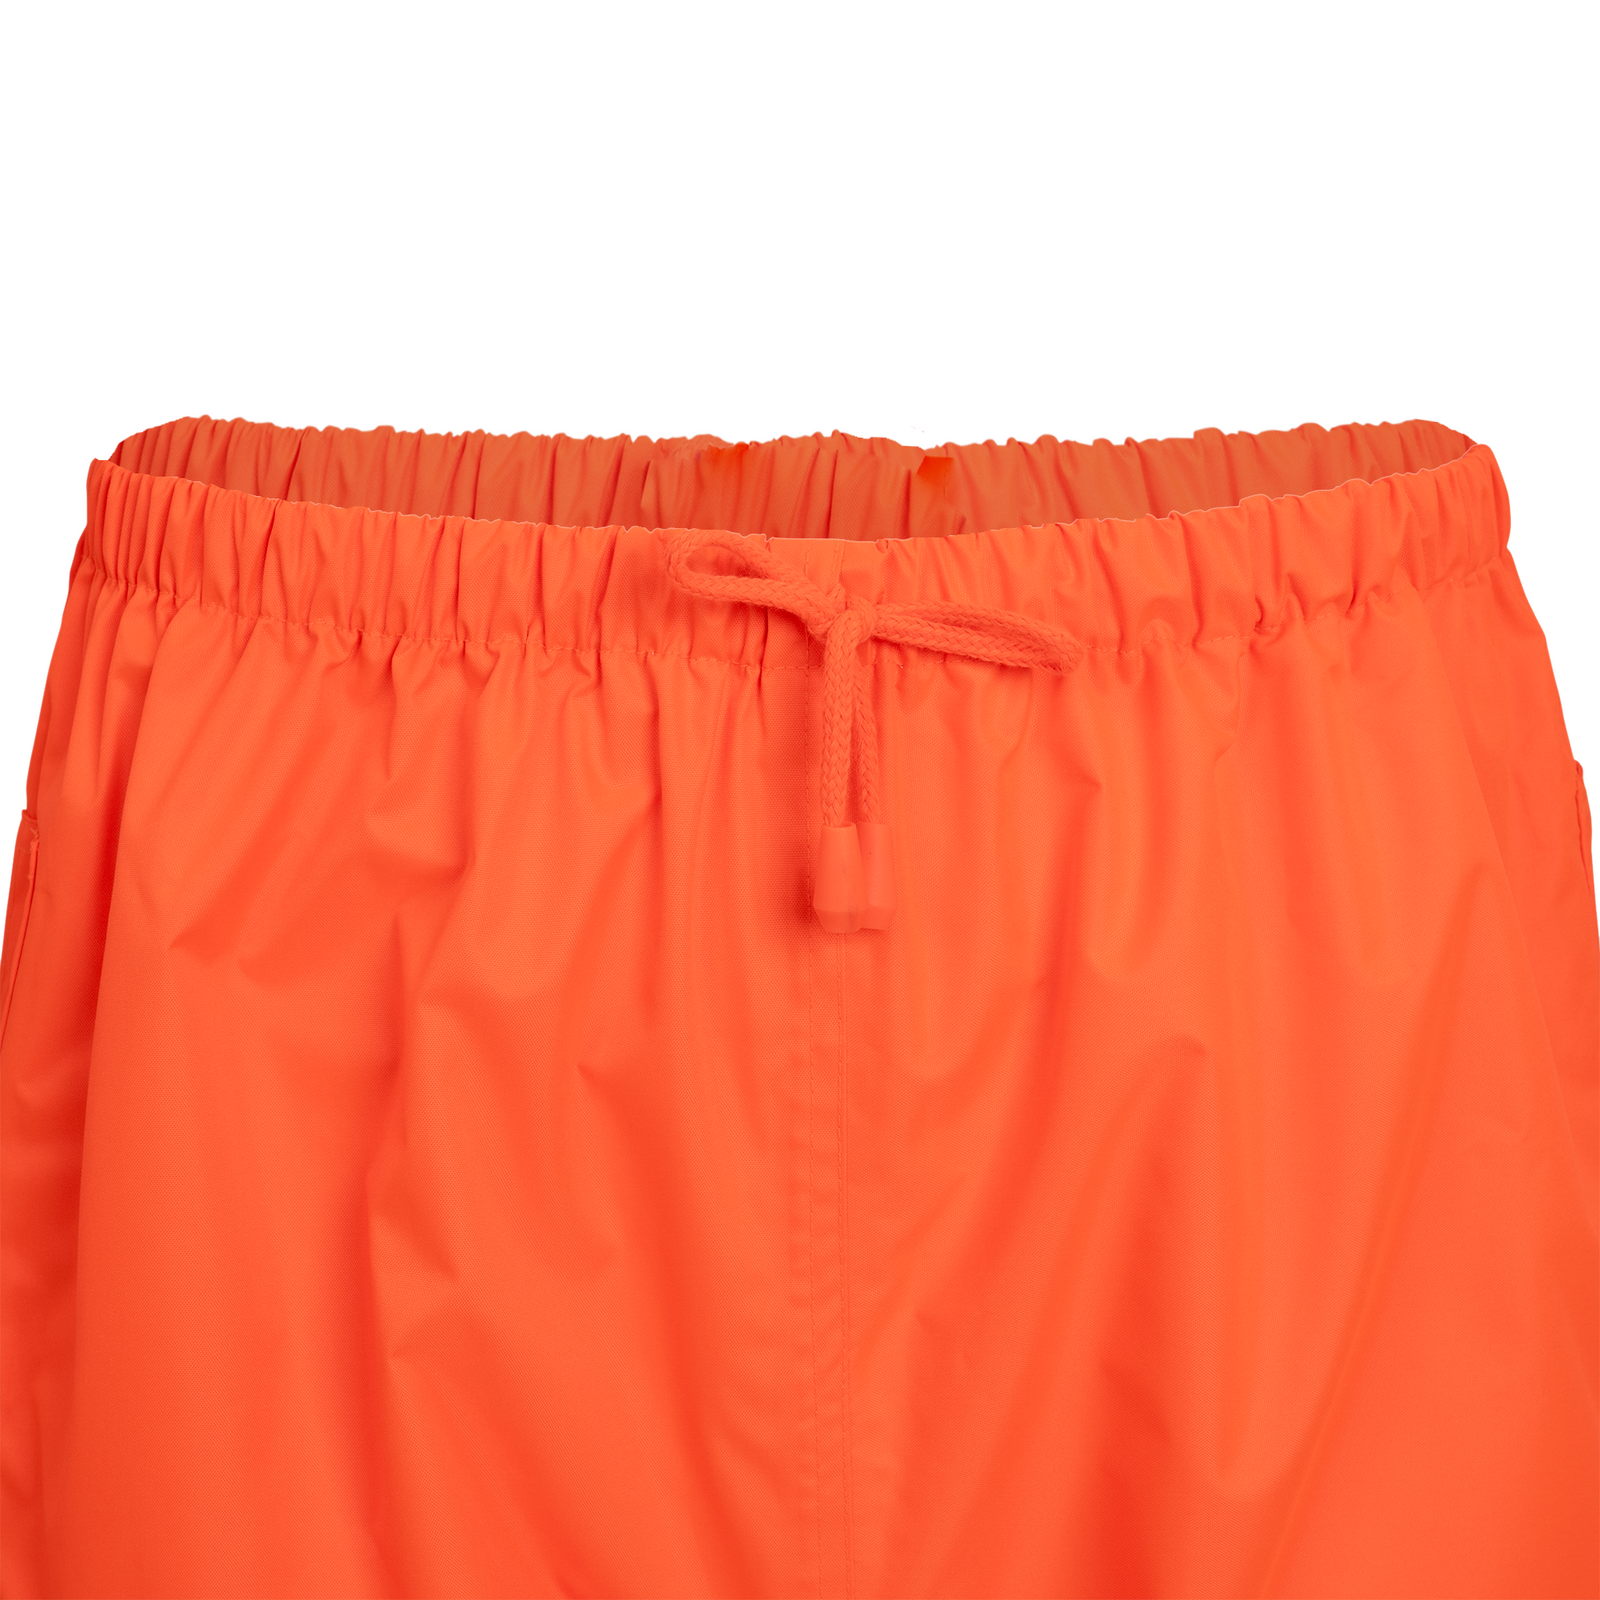 Hi vis orange rain pants with elastic waits and adjustable waits string for improved sizing